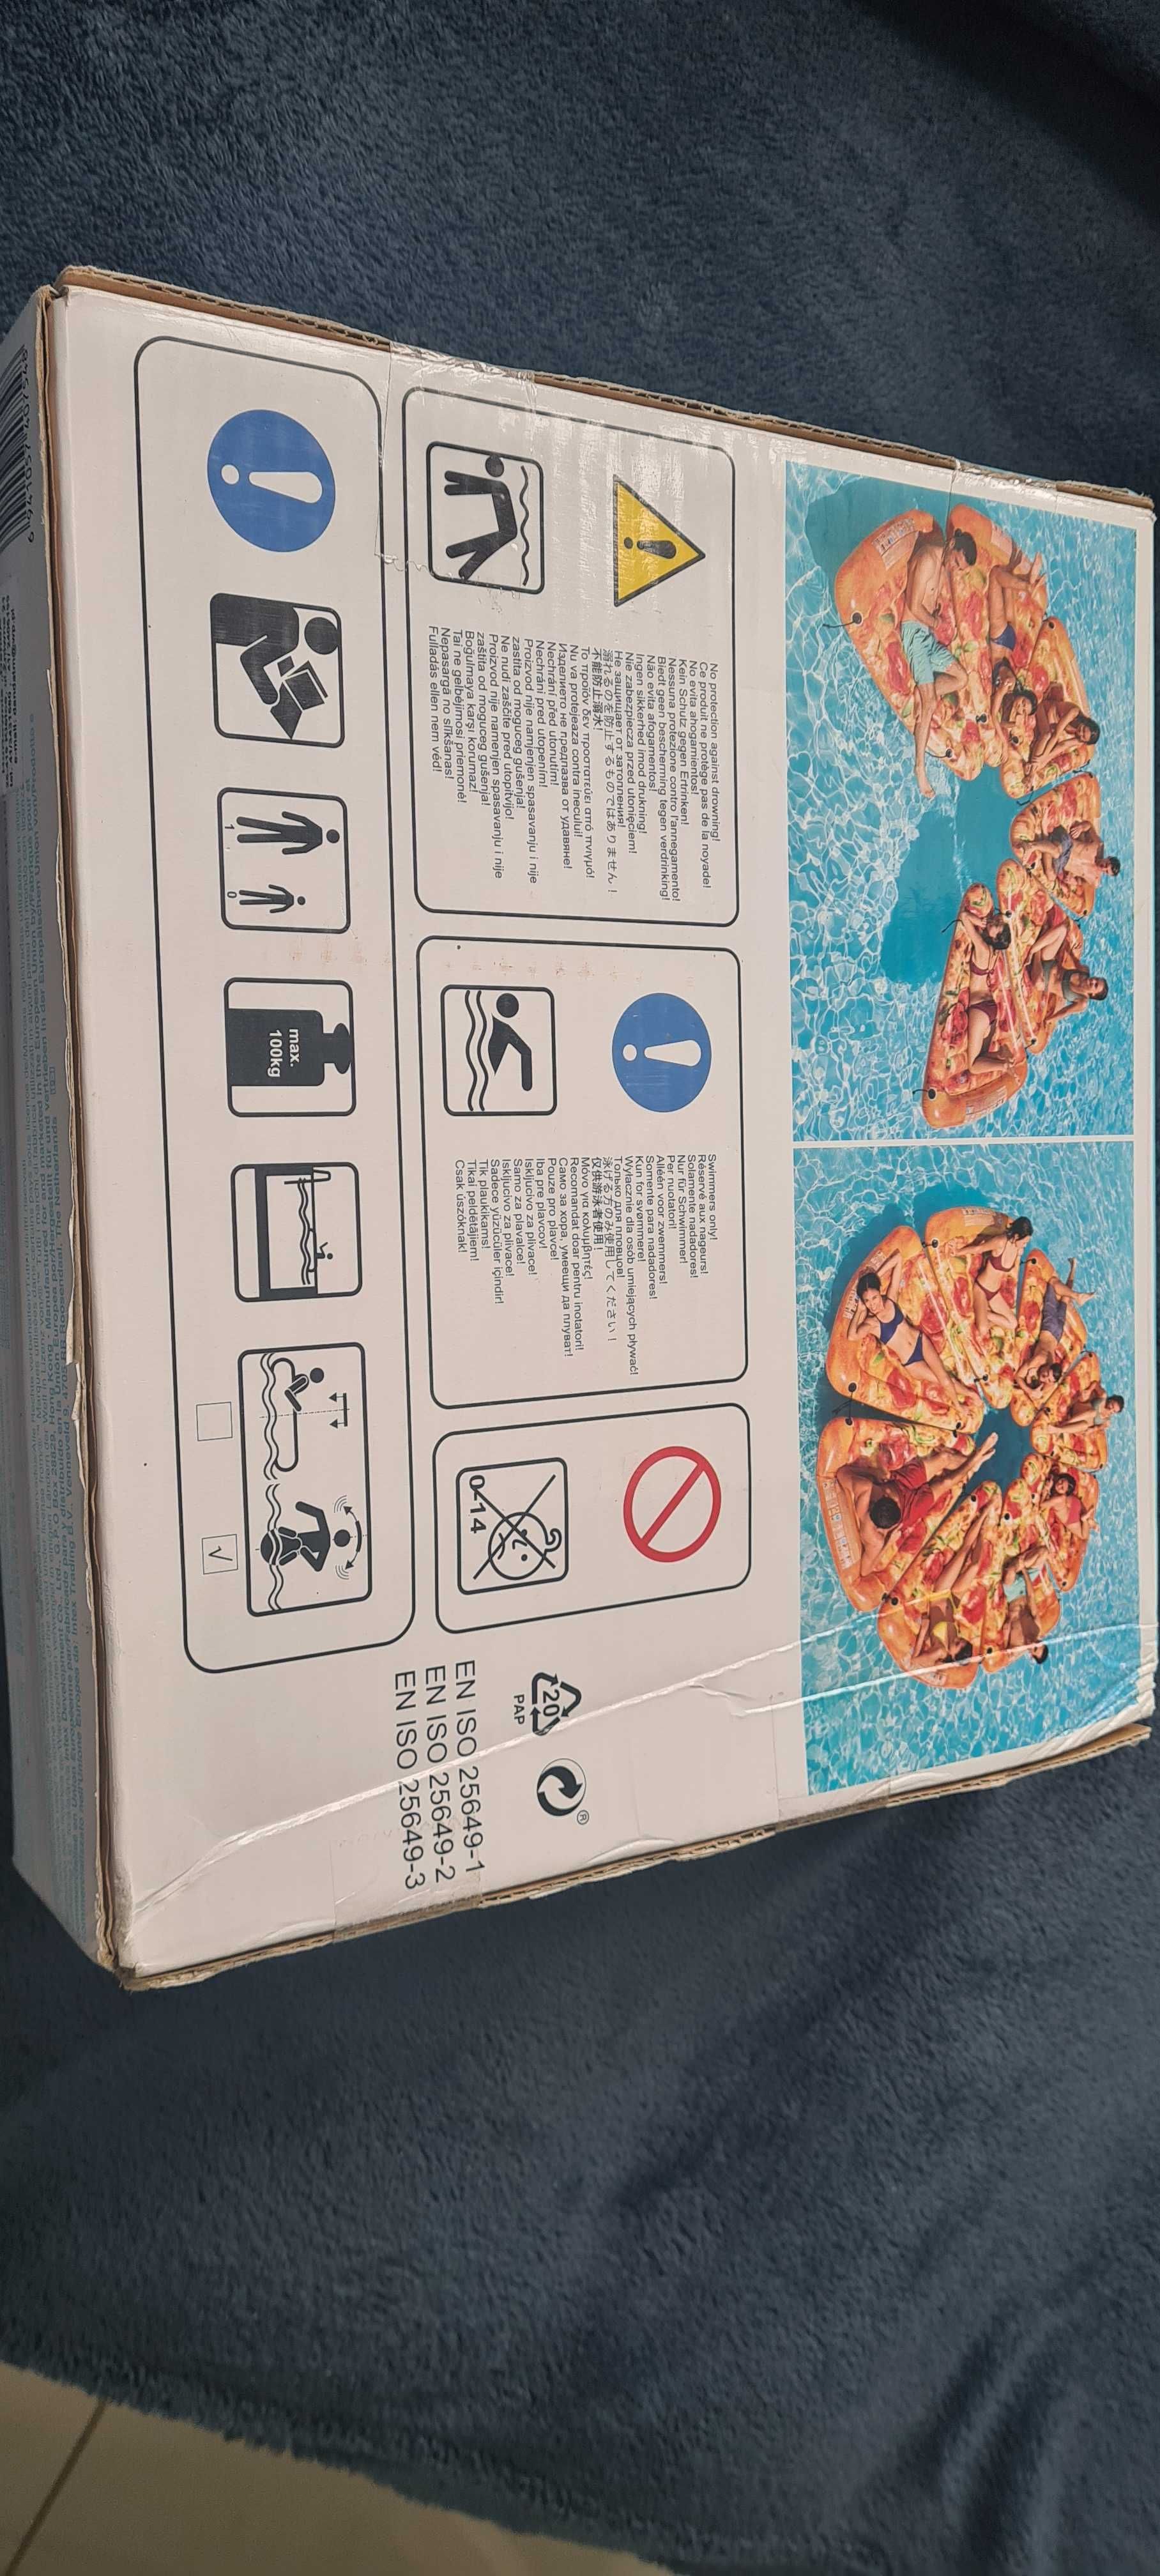 Materac dmuchany Intex pizza